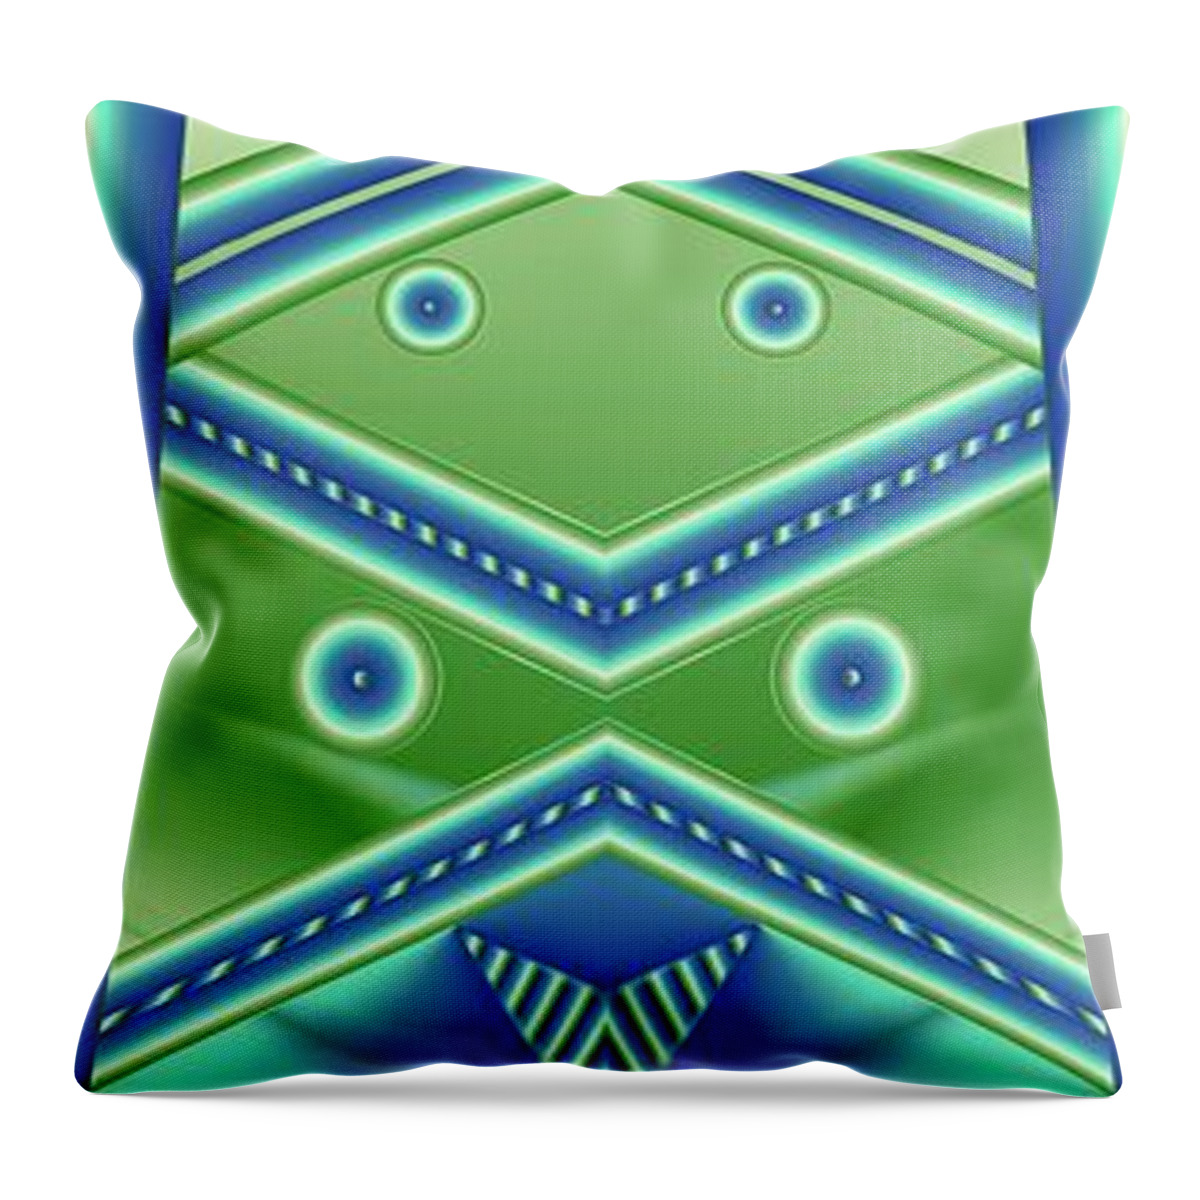 Aquamarine Throw Pillow featuring the digital art Aquamarine by Ron Bissett